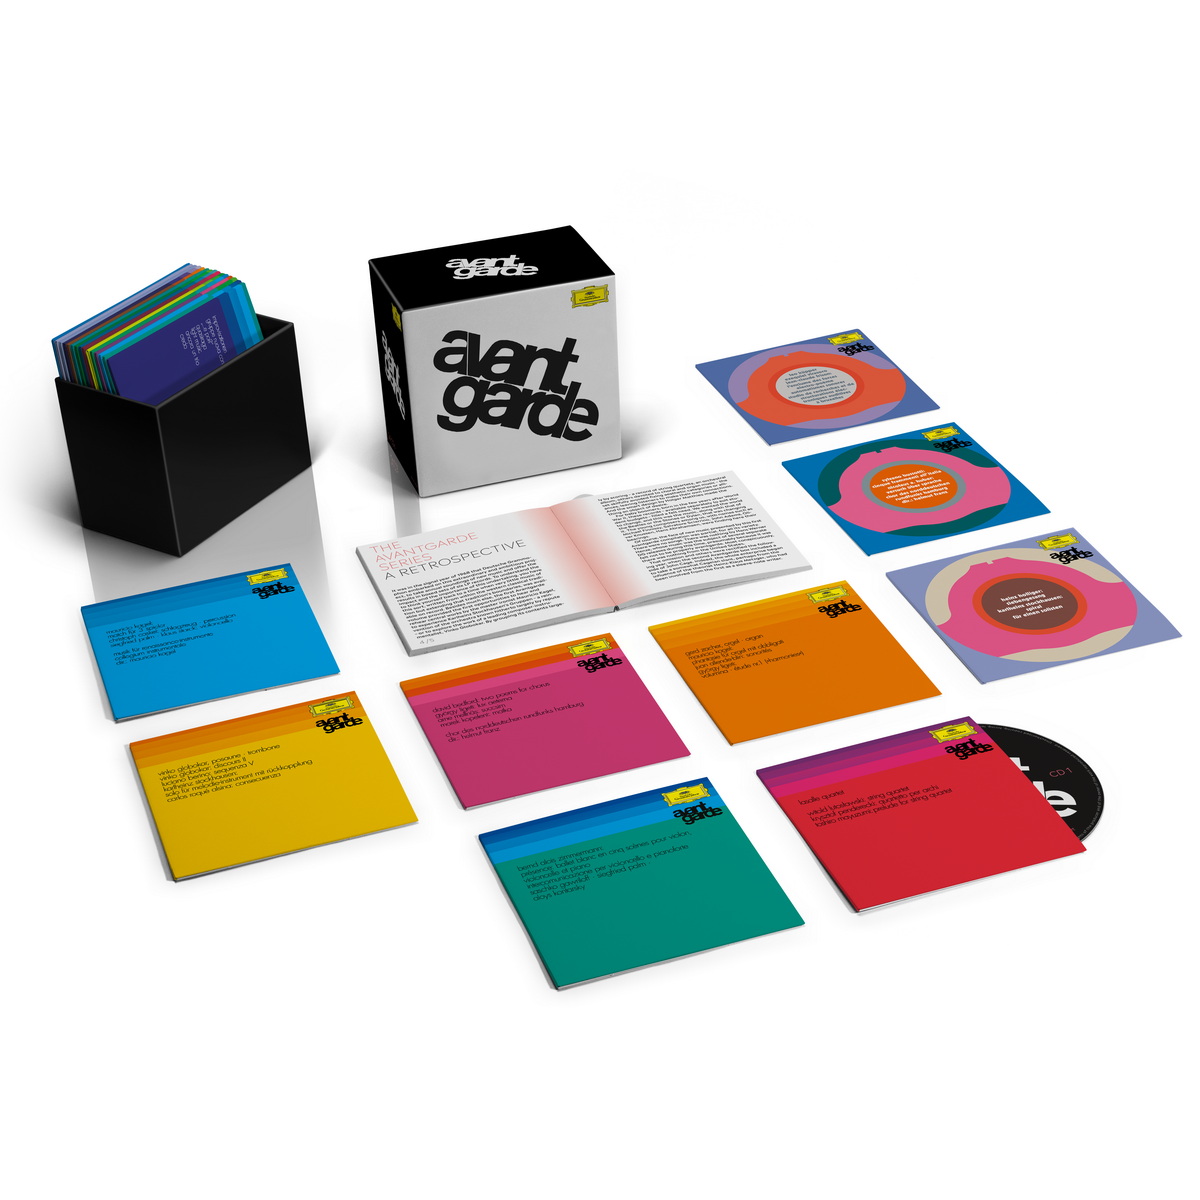 Deutsche Grammophon wznawia serię Avantgarde na płytach CD